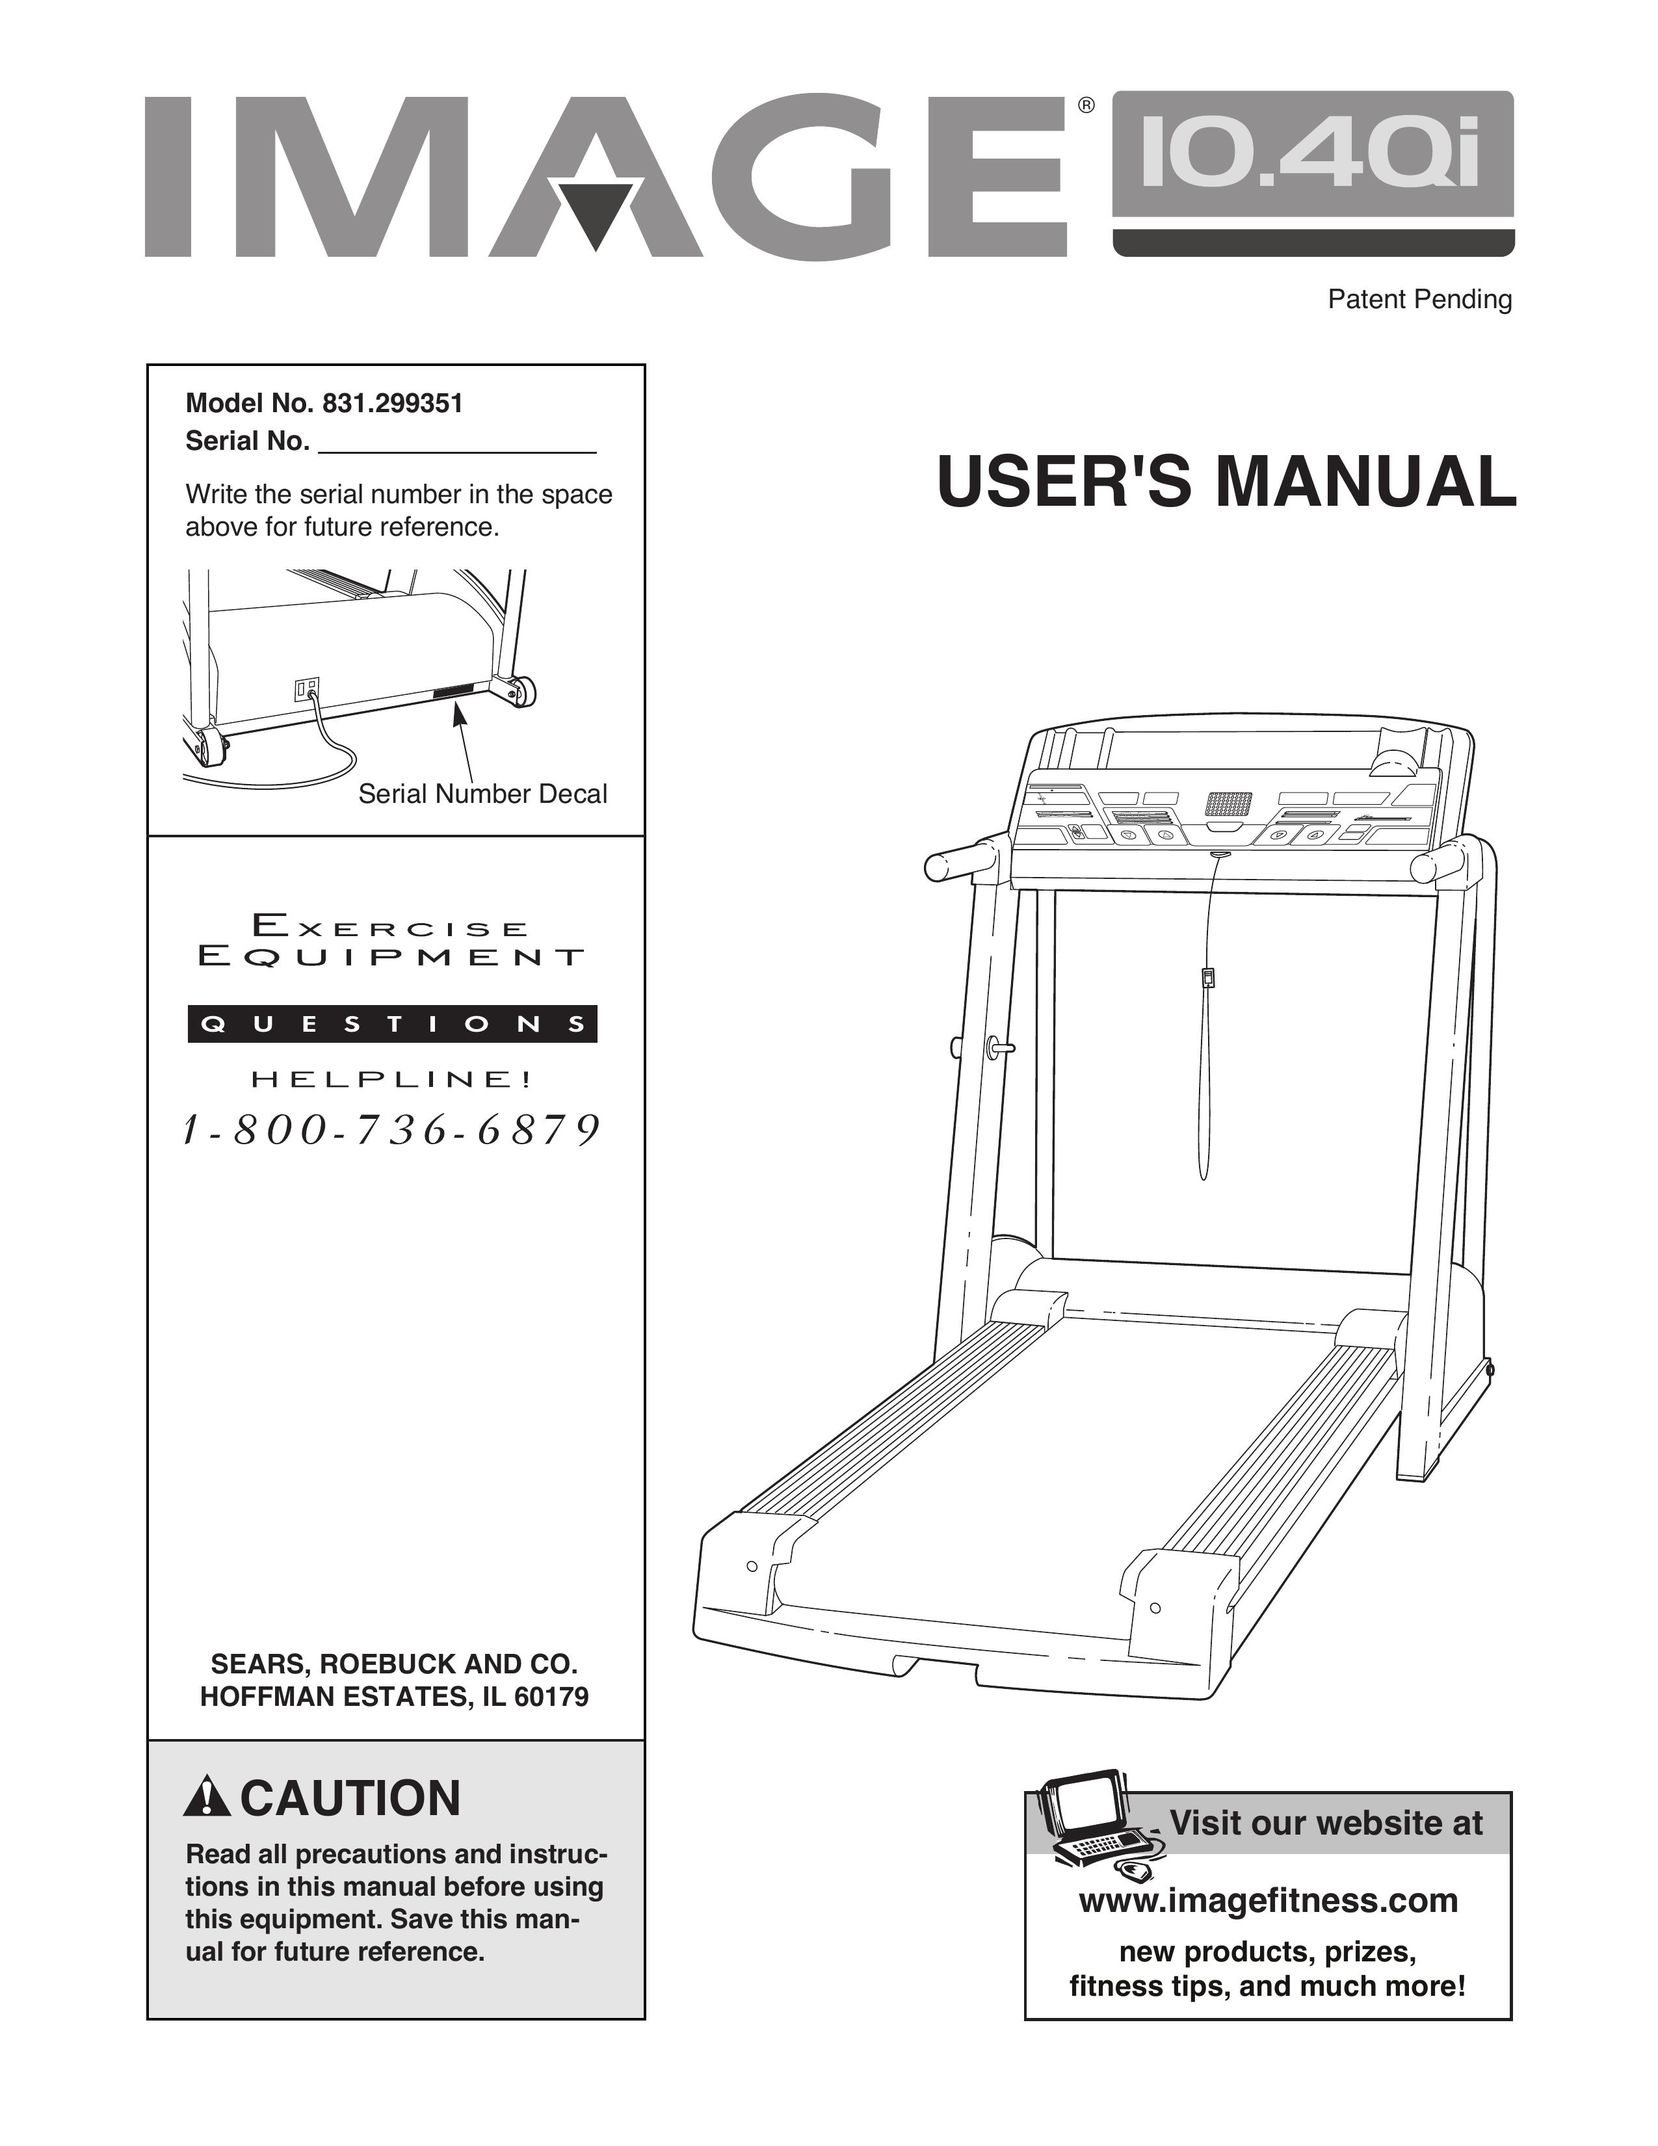 Image 831.299351 Treadmill User Manual